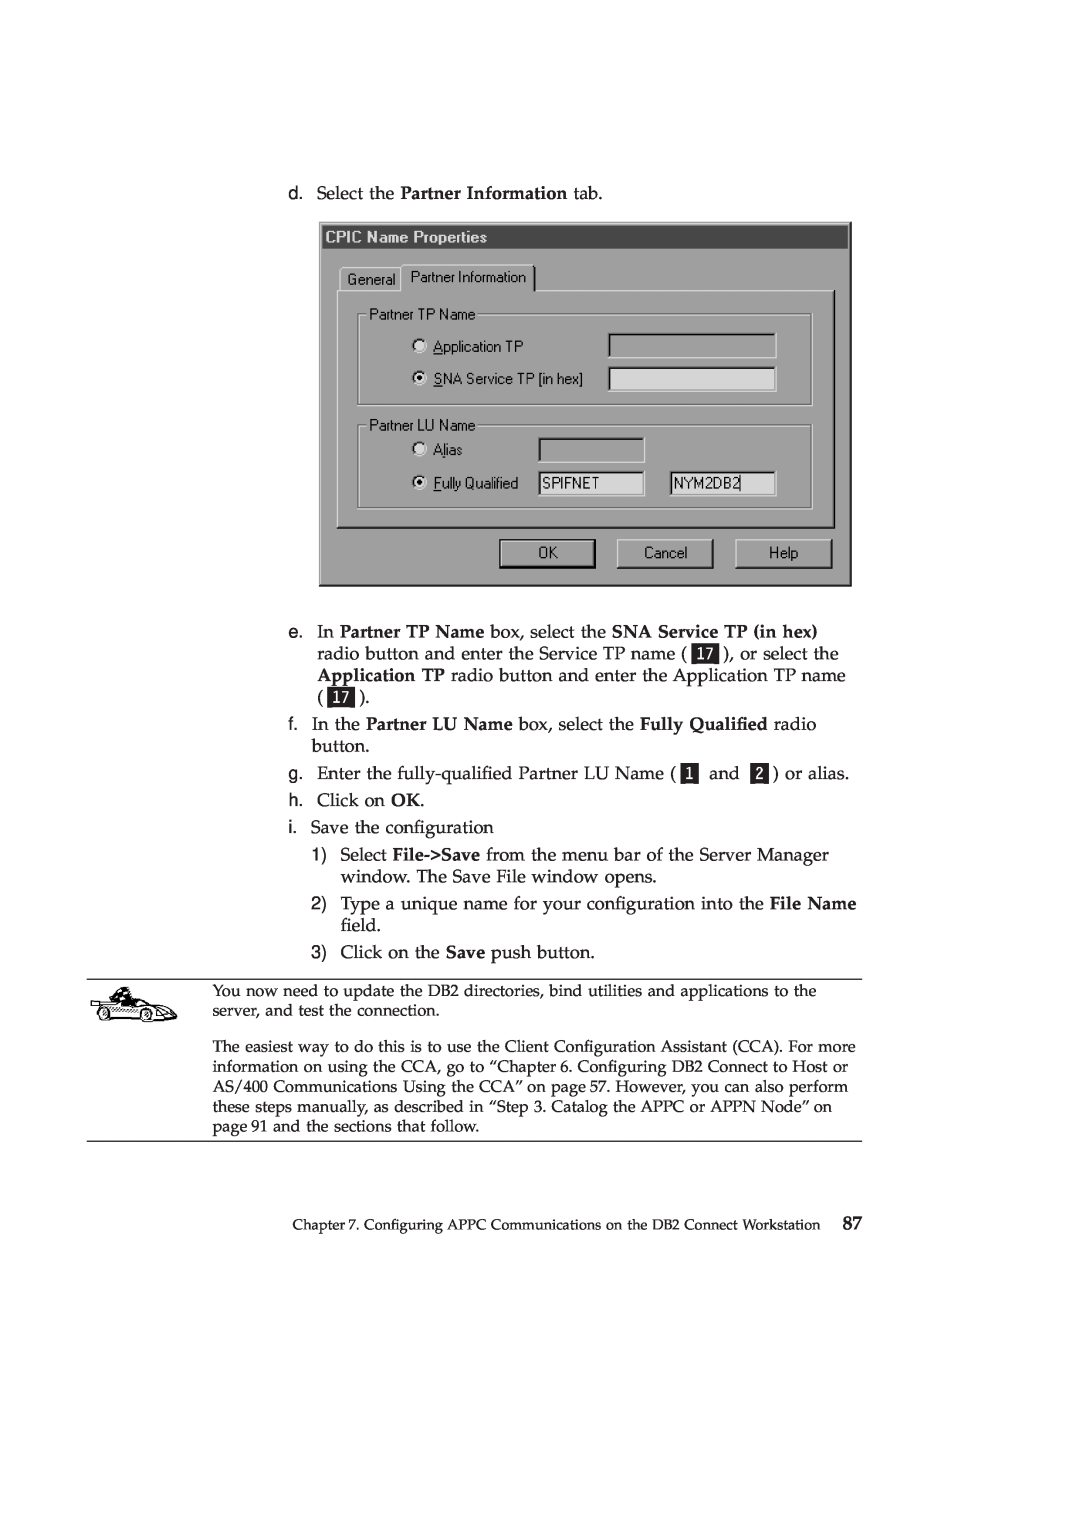 IBM GC09-2830-00 manual d. Select the Partner Information tab 